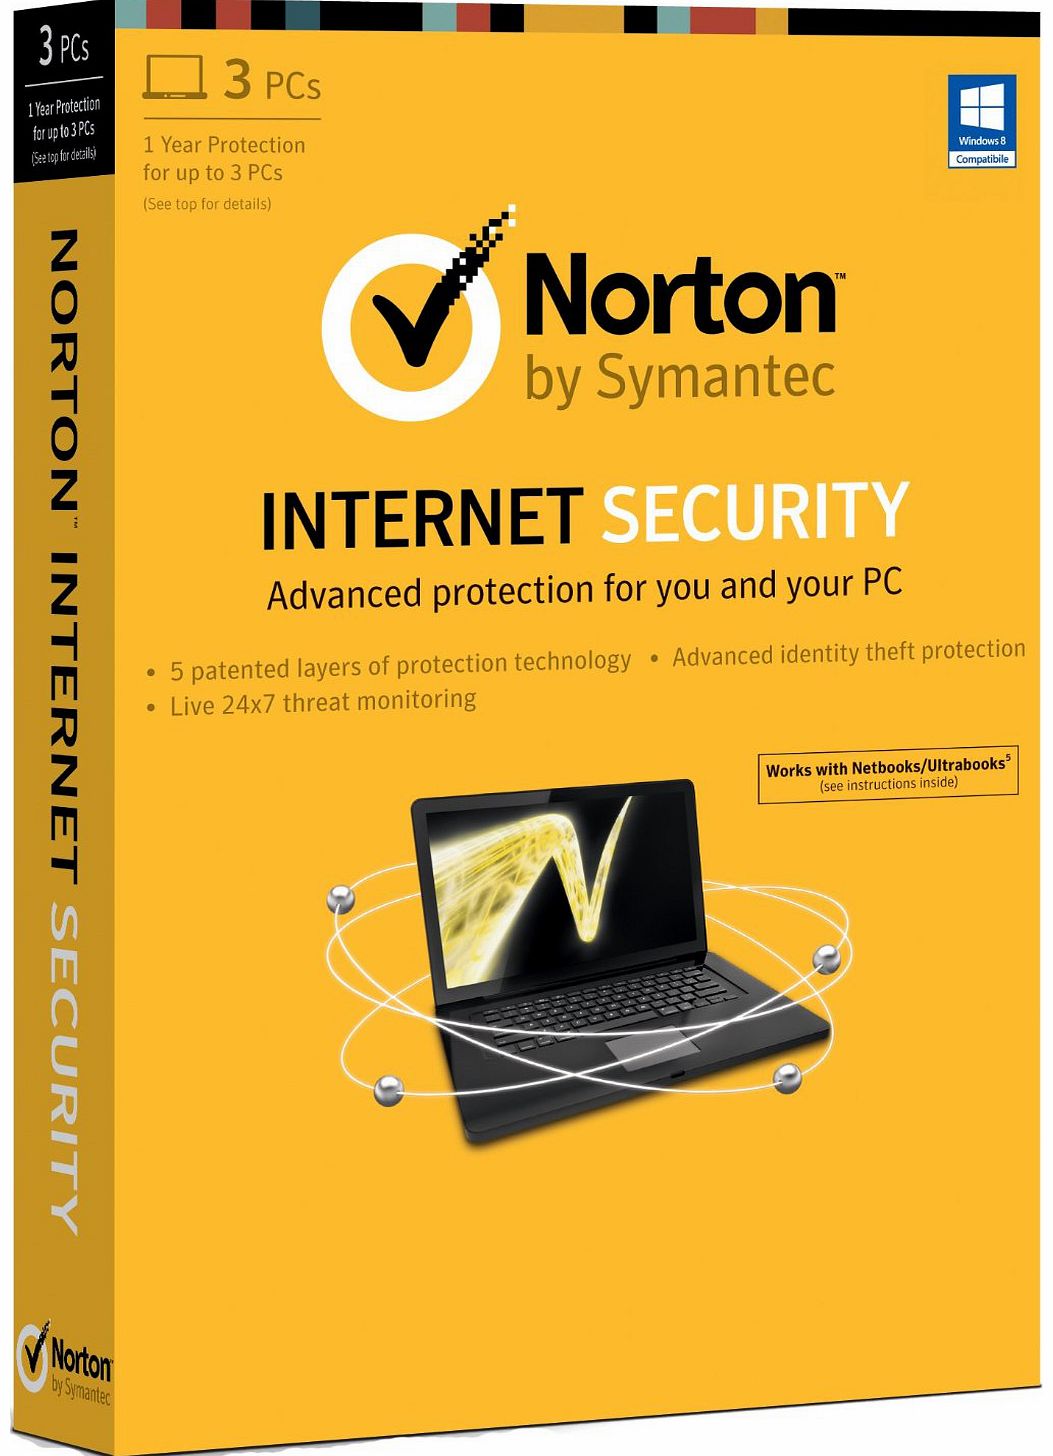 Norton NIS-3PC-21298458 Computer Accessories